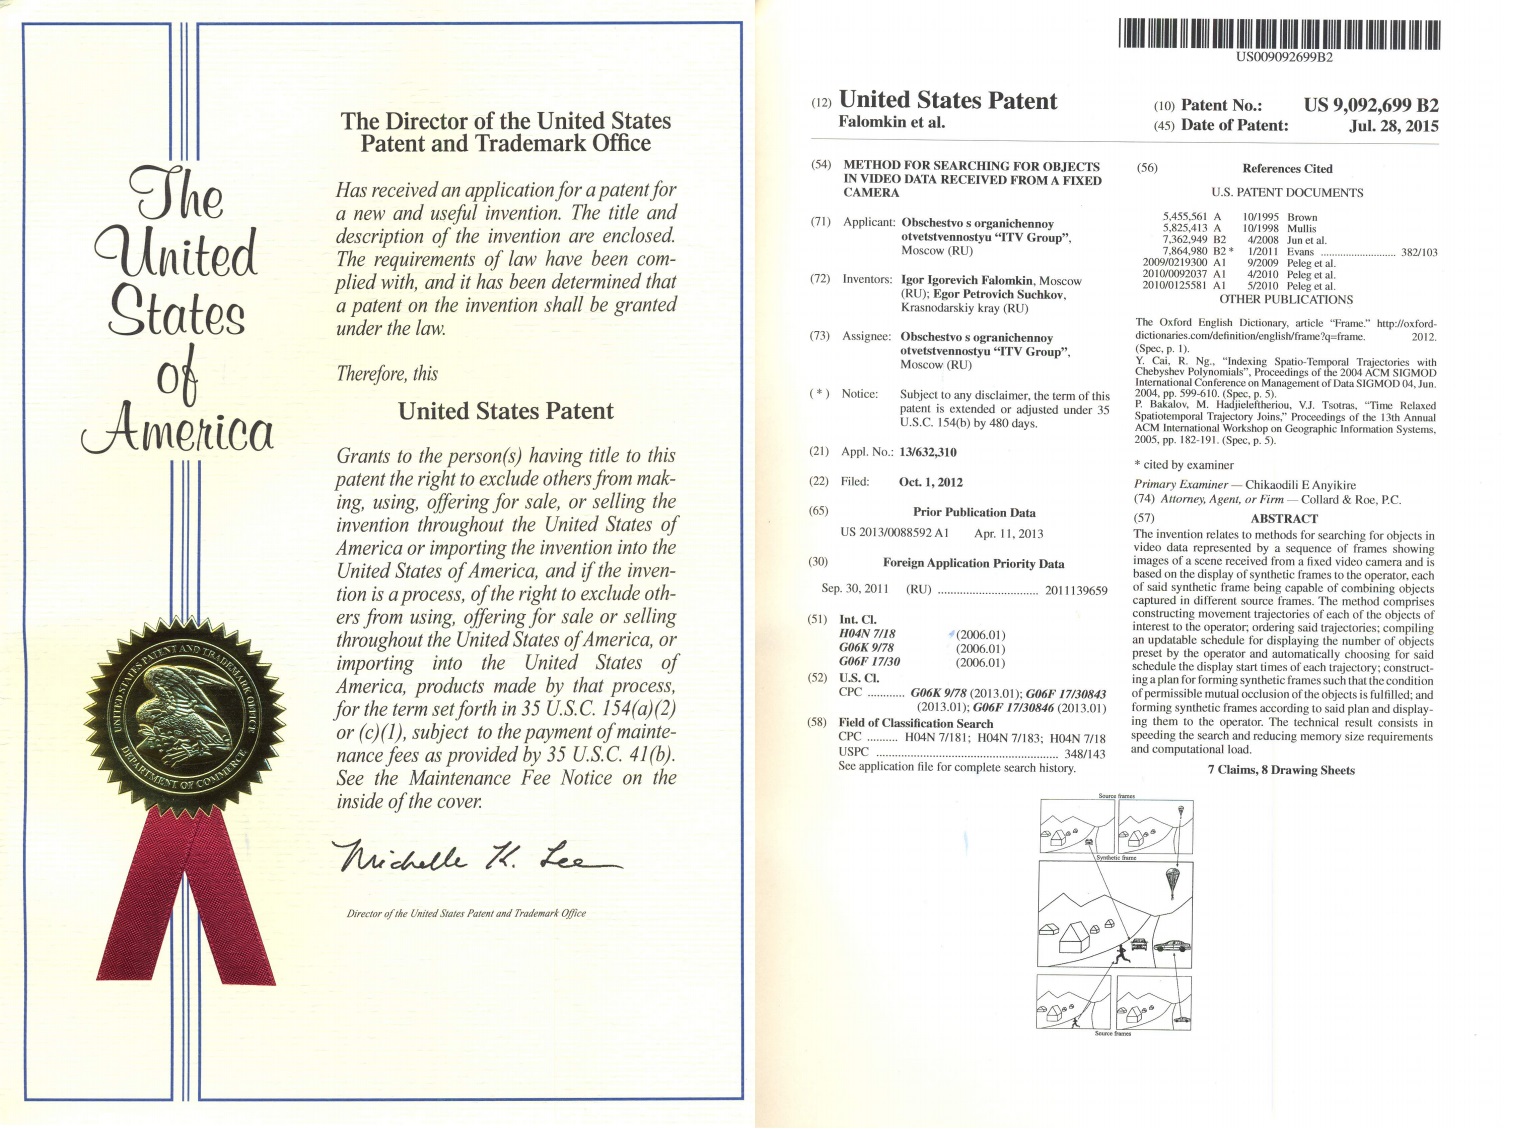 patent_US9092699.jpg